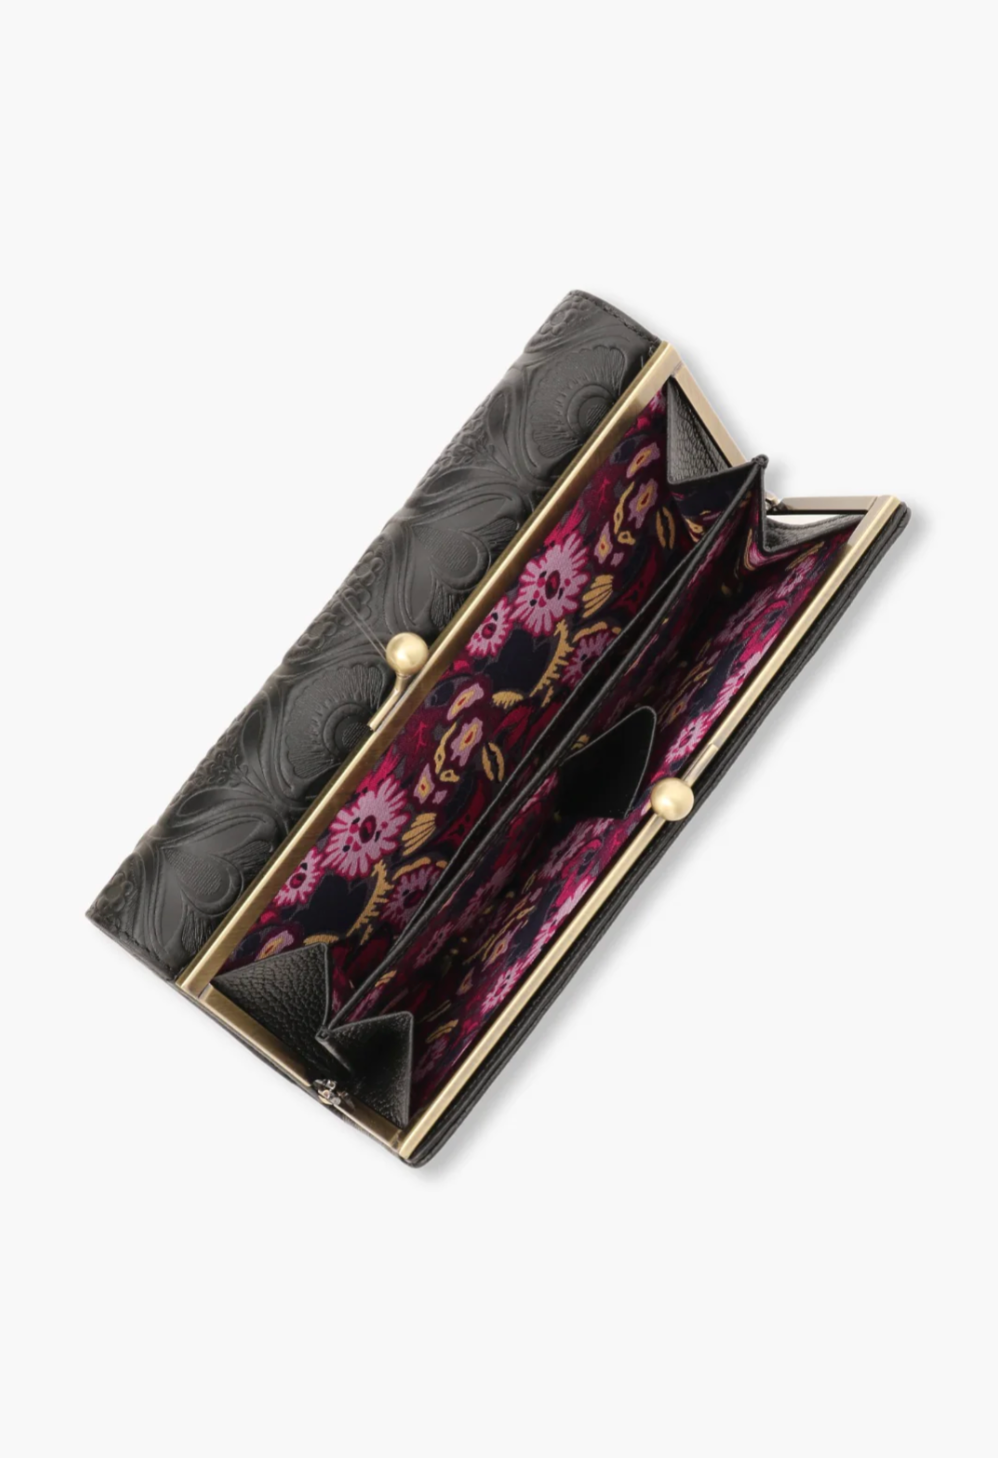 Nova Wallet black, golden kiss lock closure, purple floral fabric inside